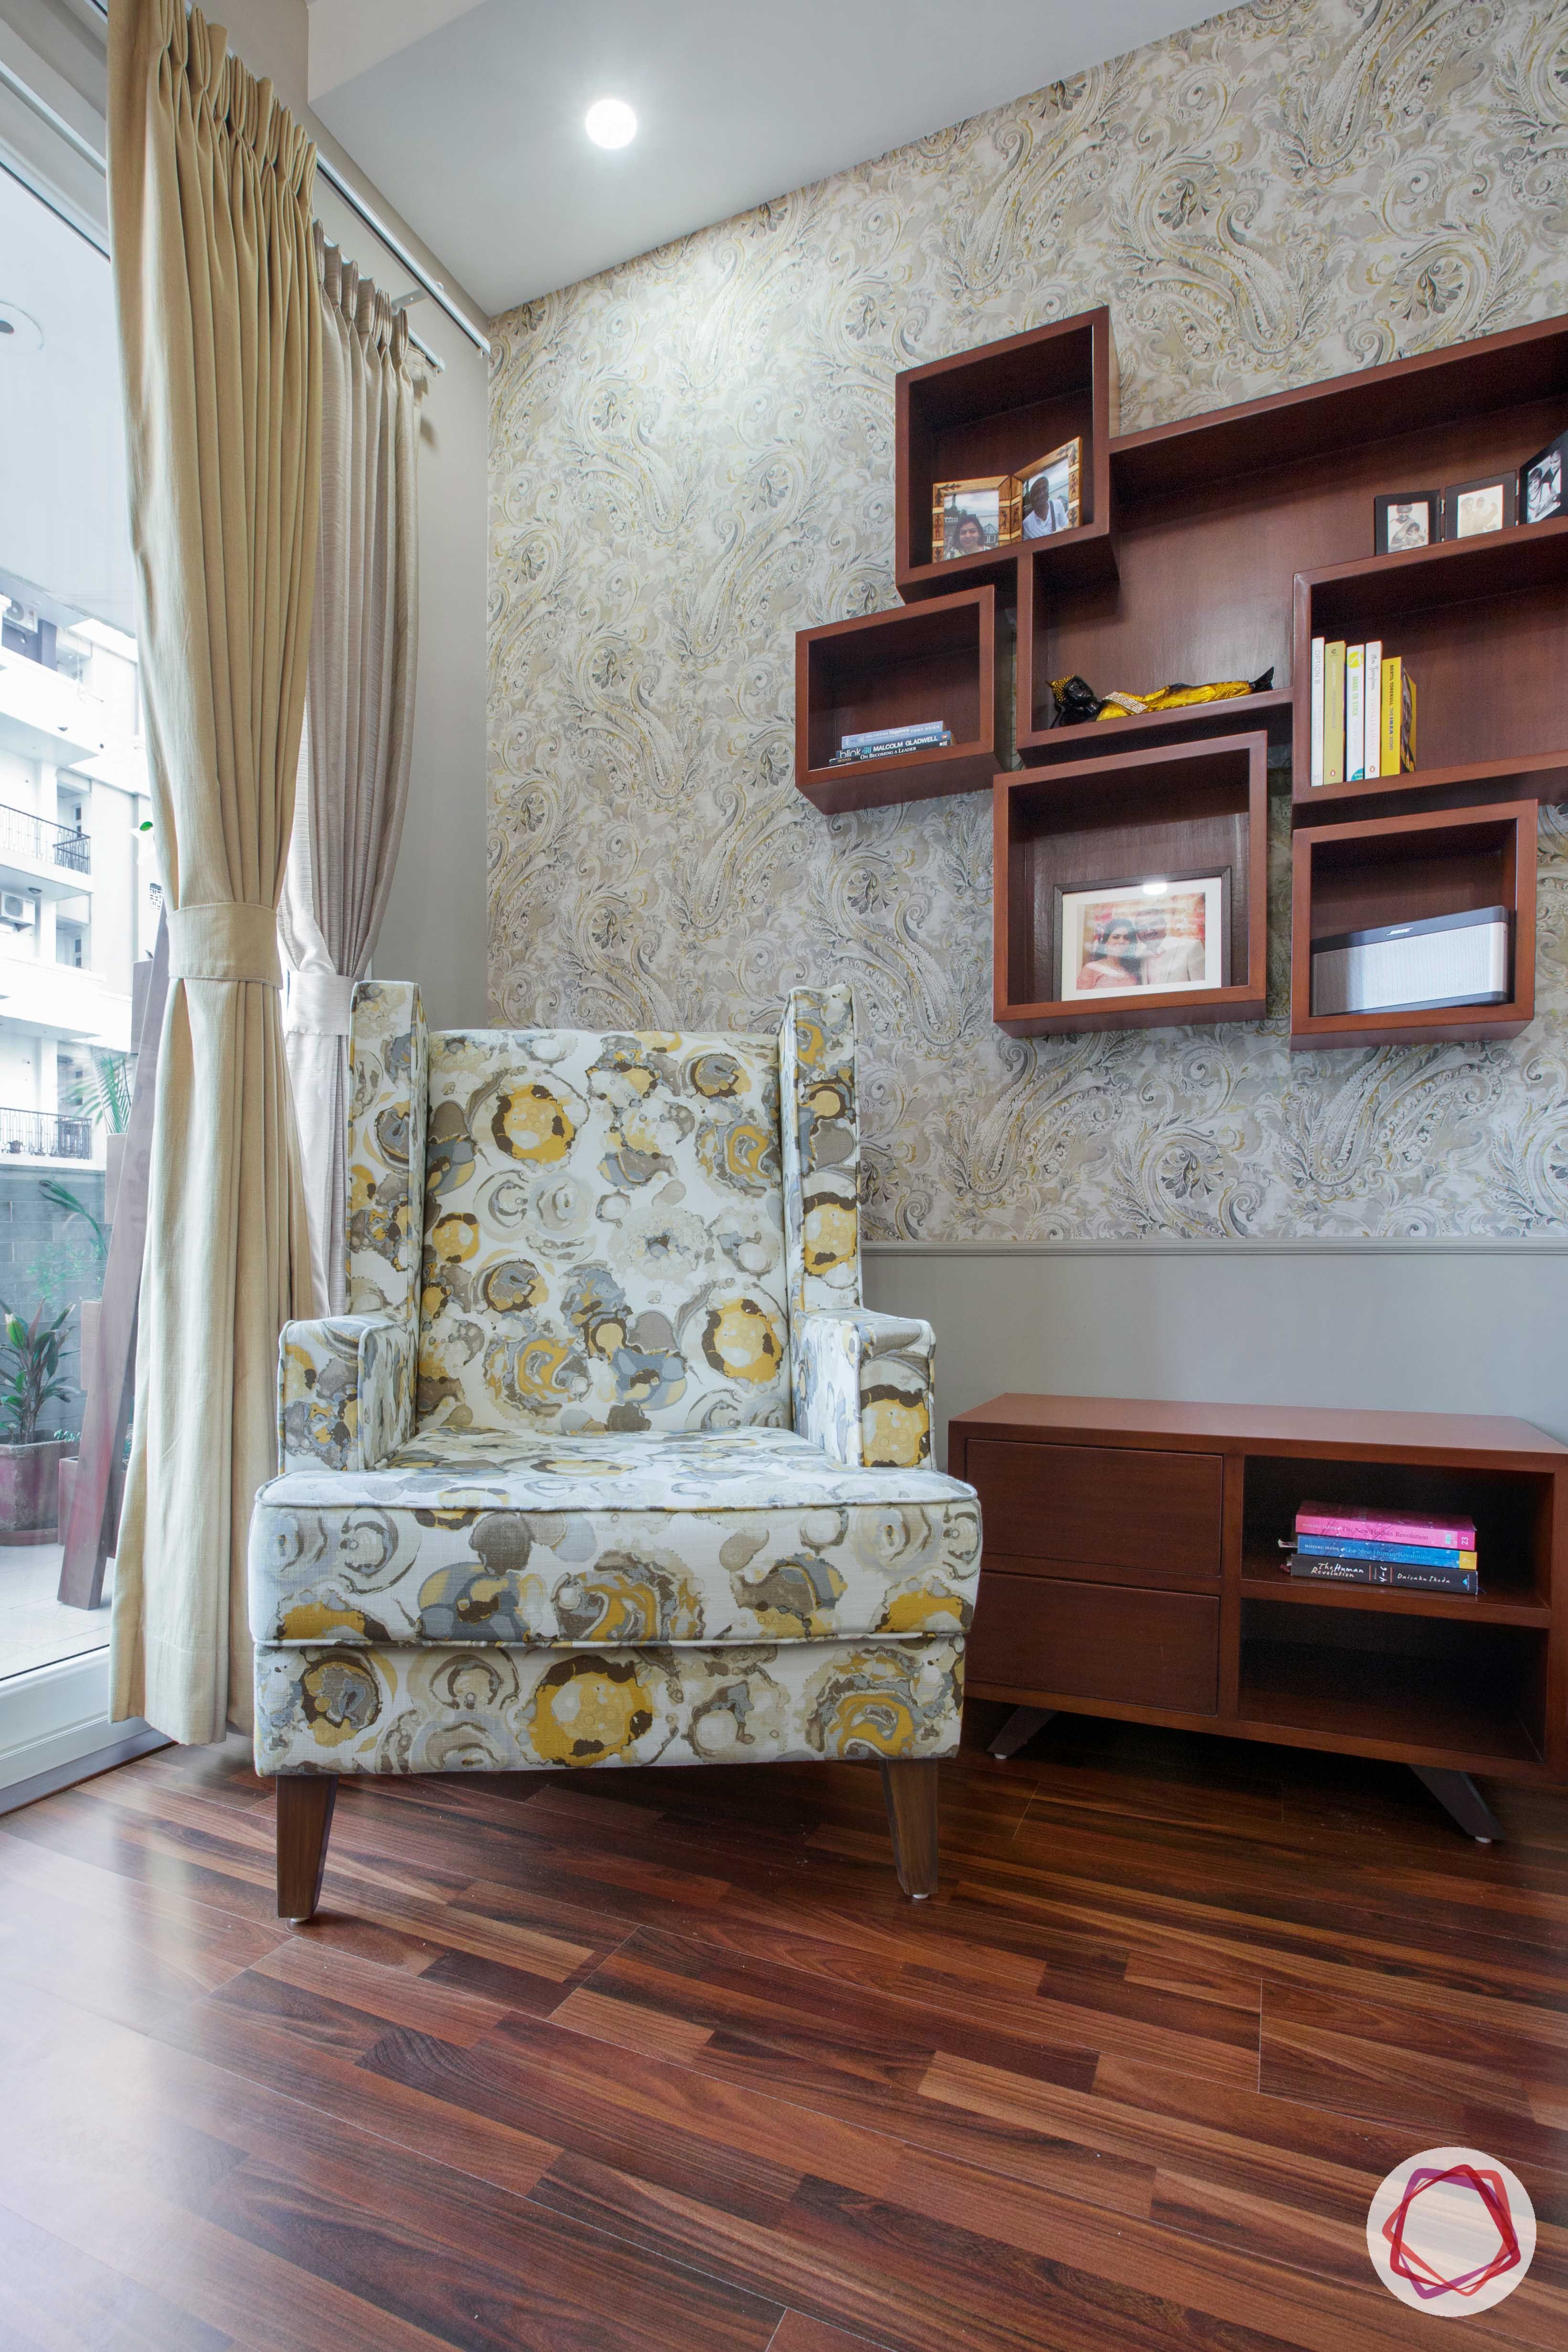 Prateek Stylome-accent chair designs-wooden shelves designs